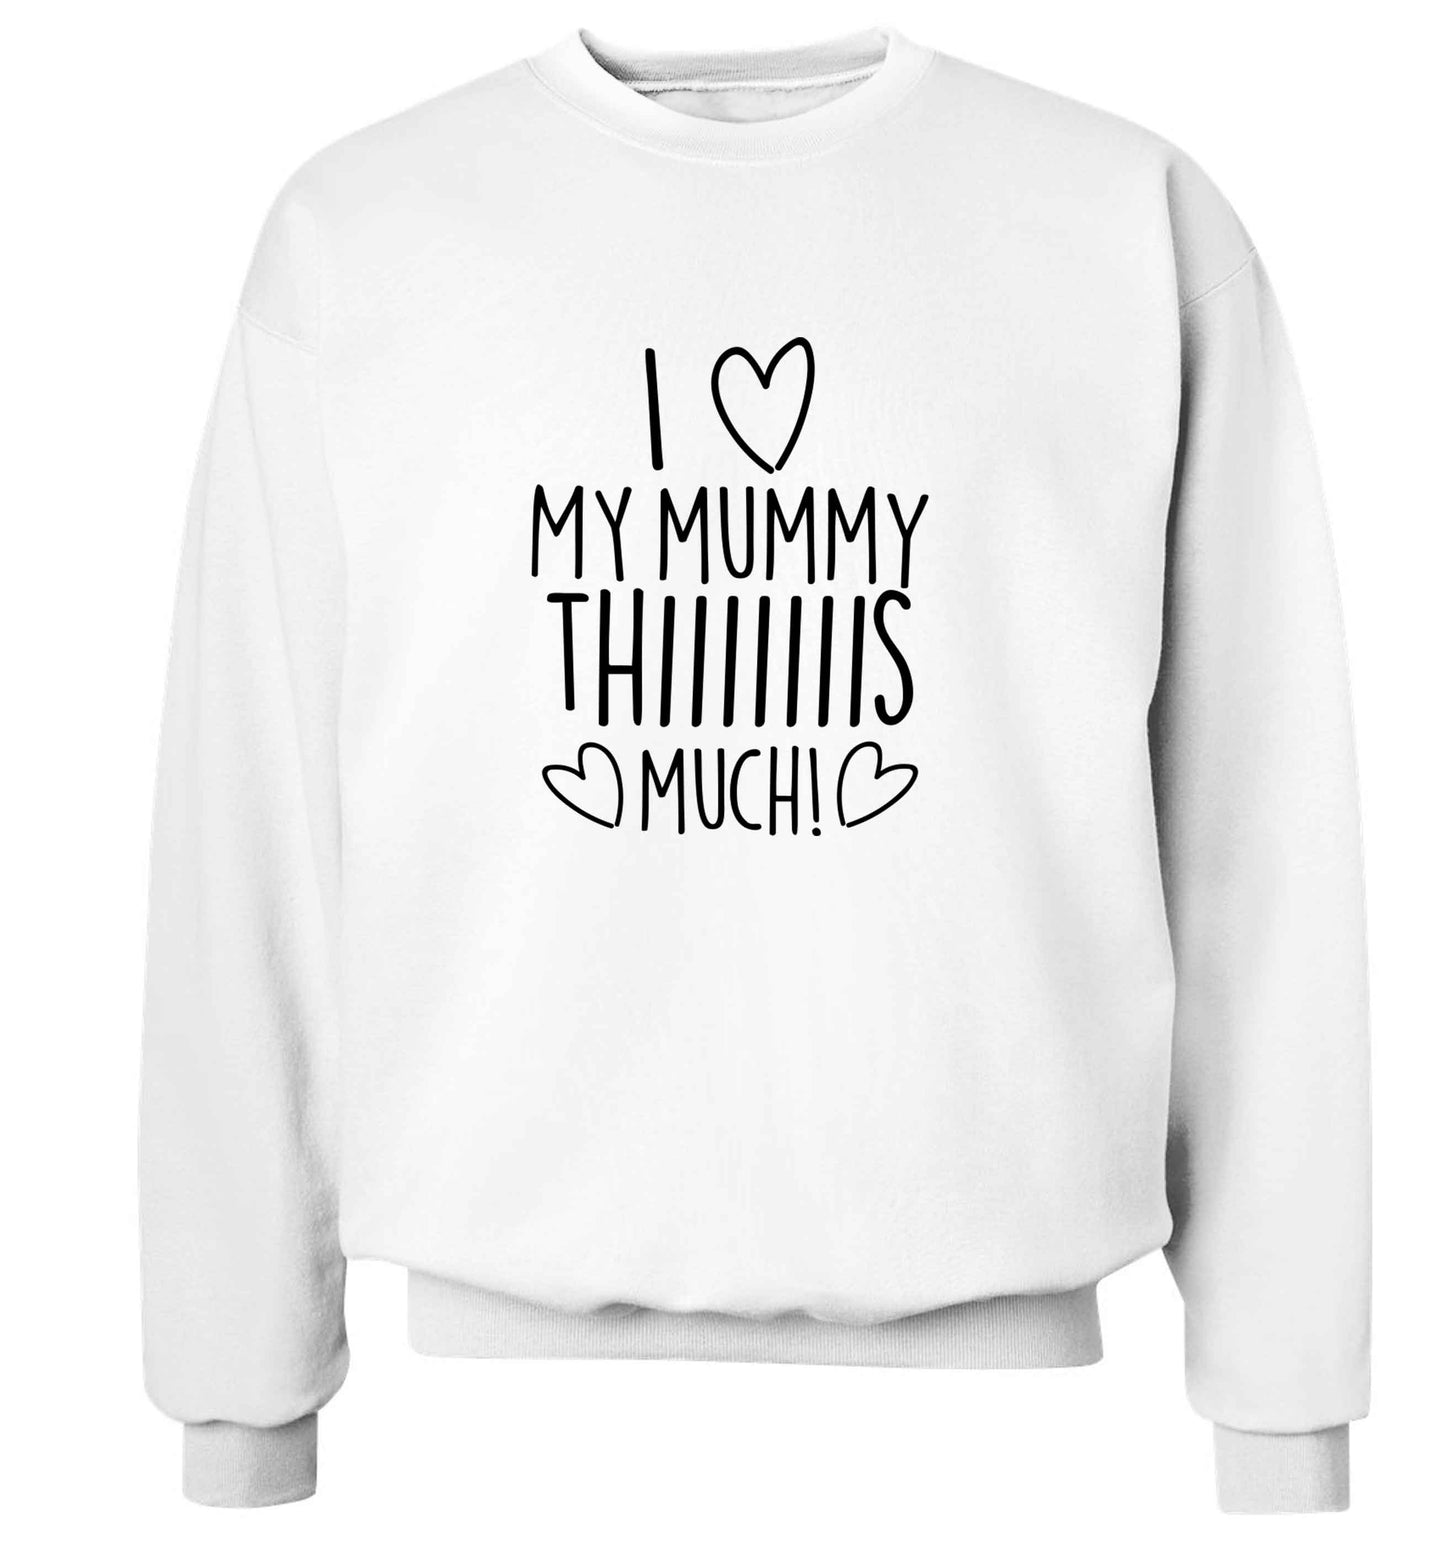 I love my mummy thiiiiis much! adult's unisex white sweater 2XL